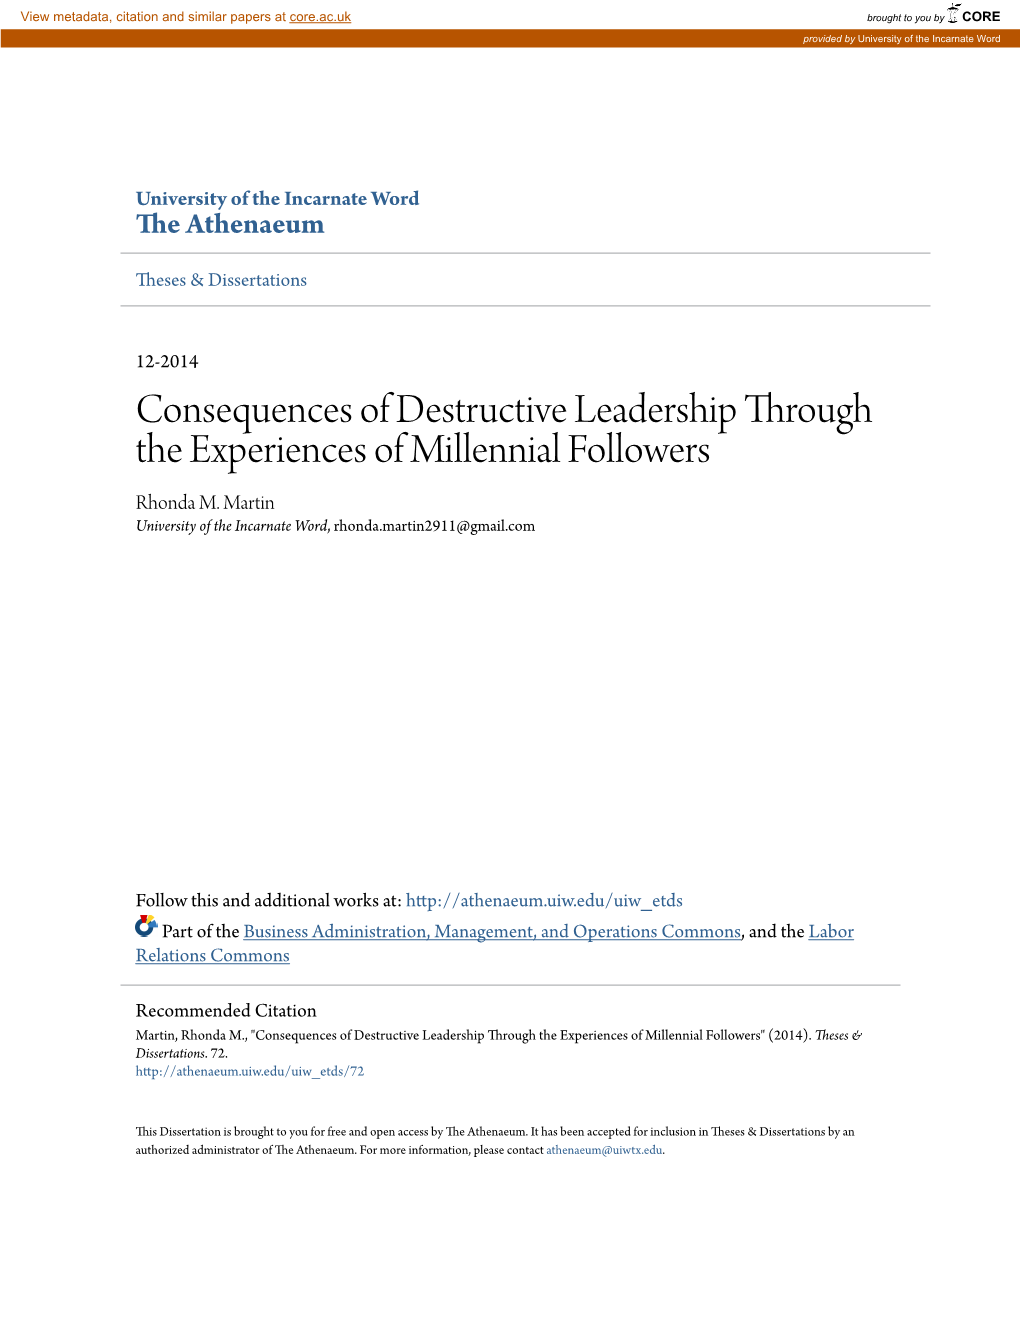 Consequences of Destructive Leadership Through the Experiences of Millennial Followers Rhonda M